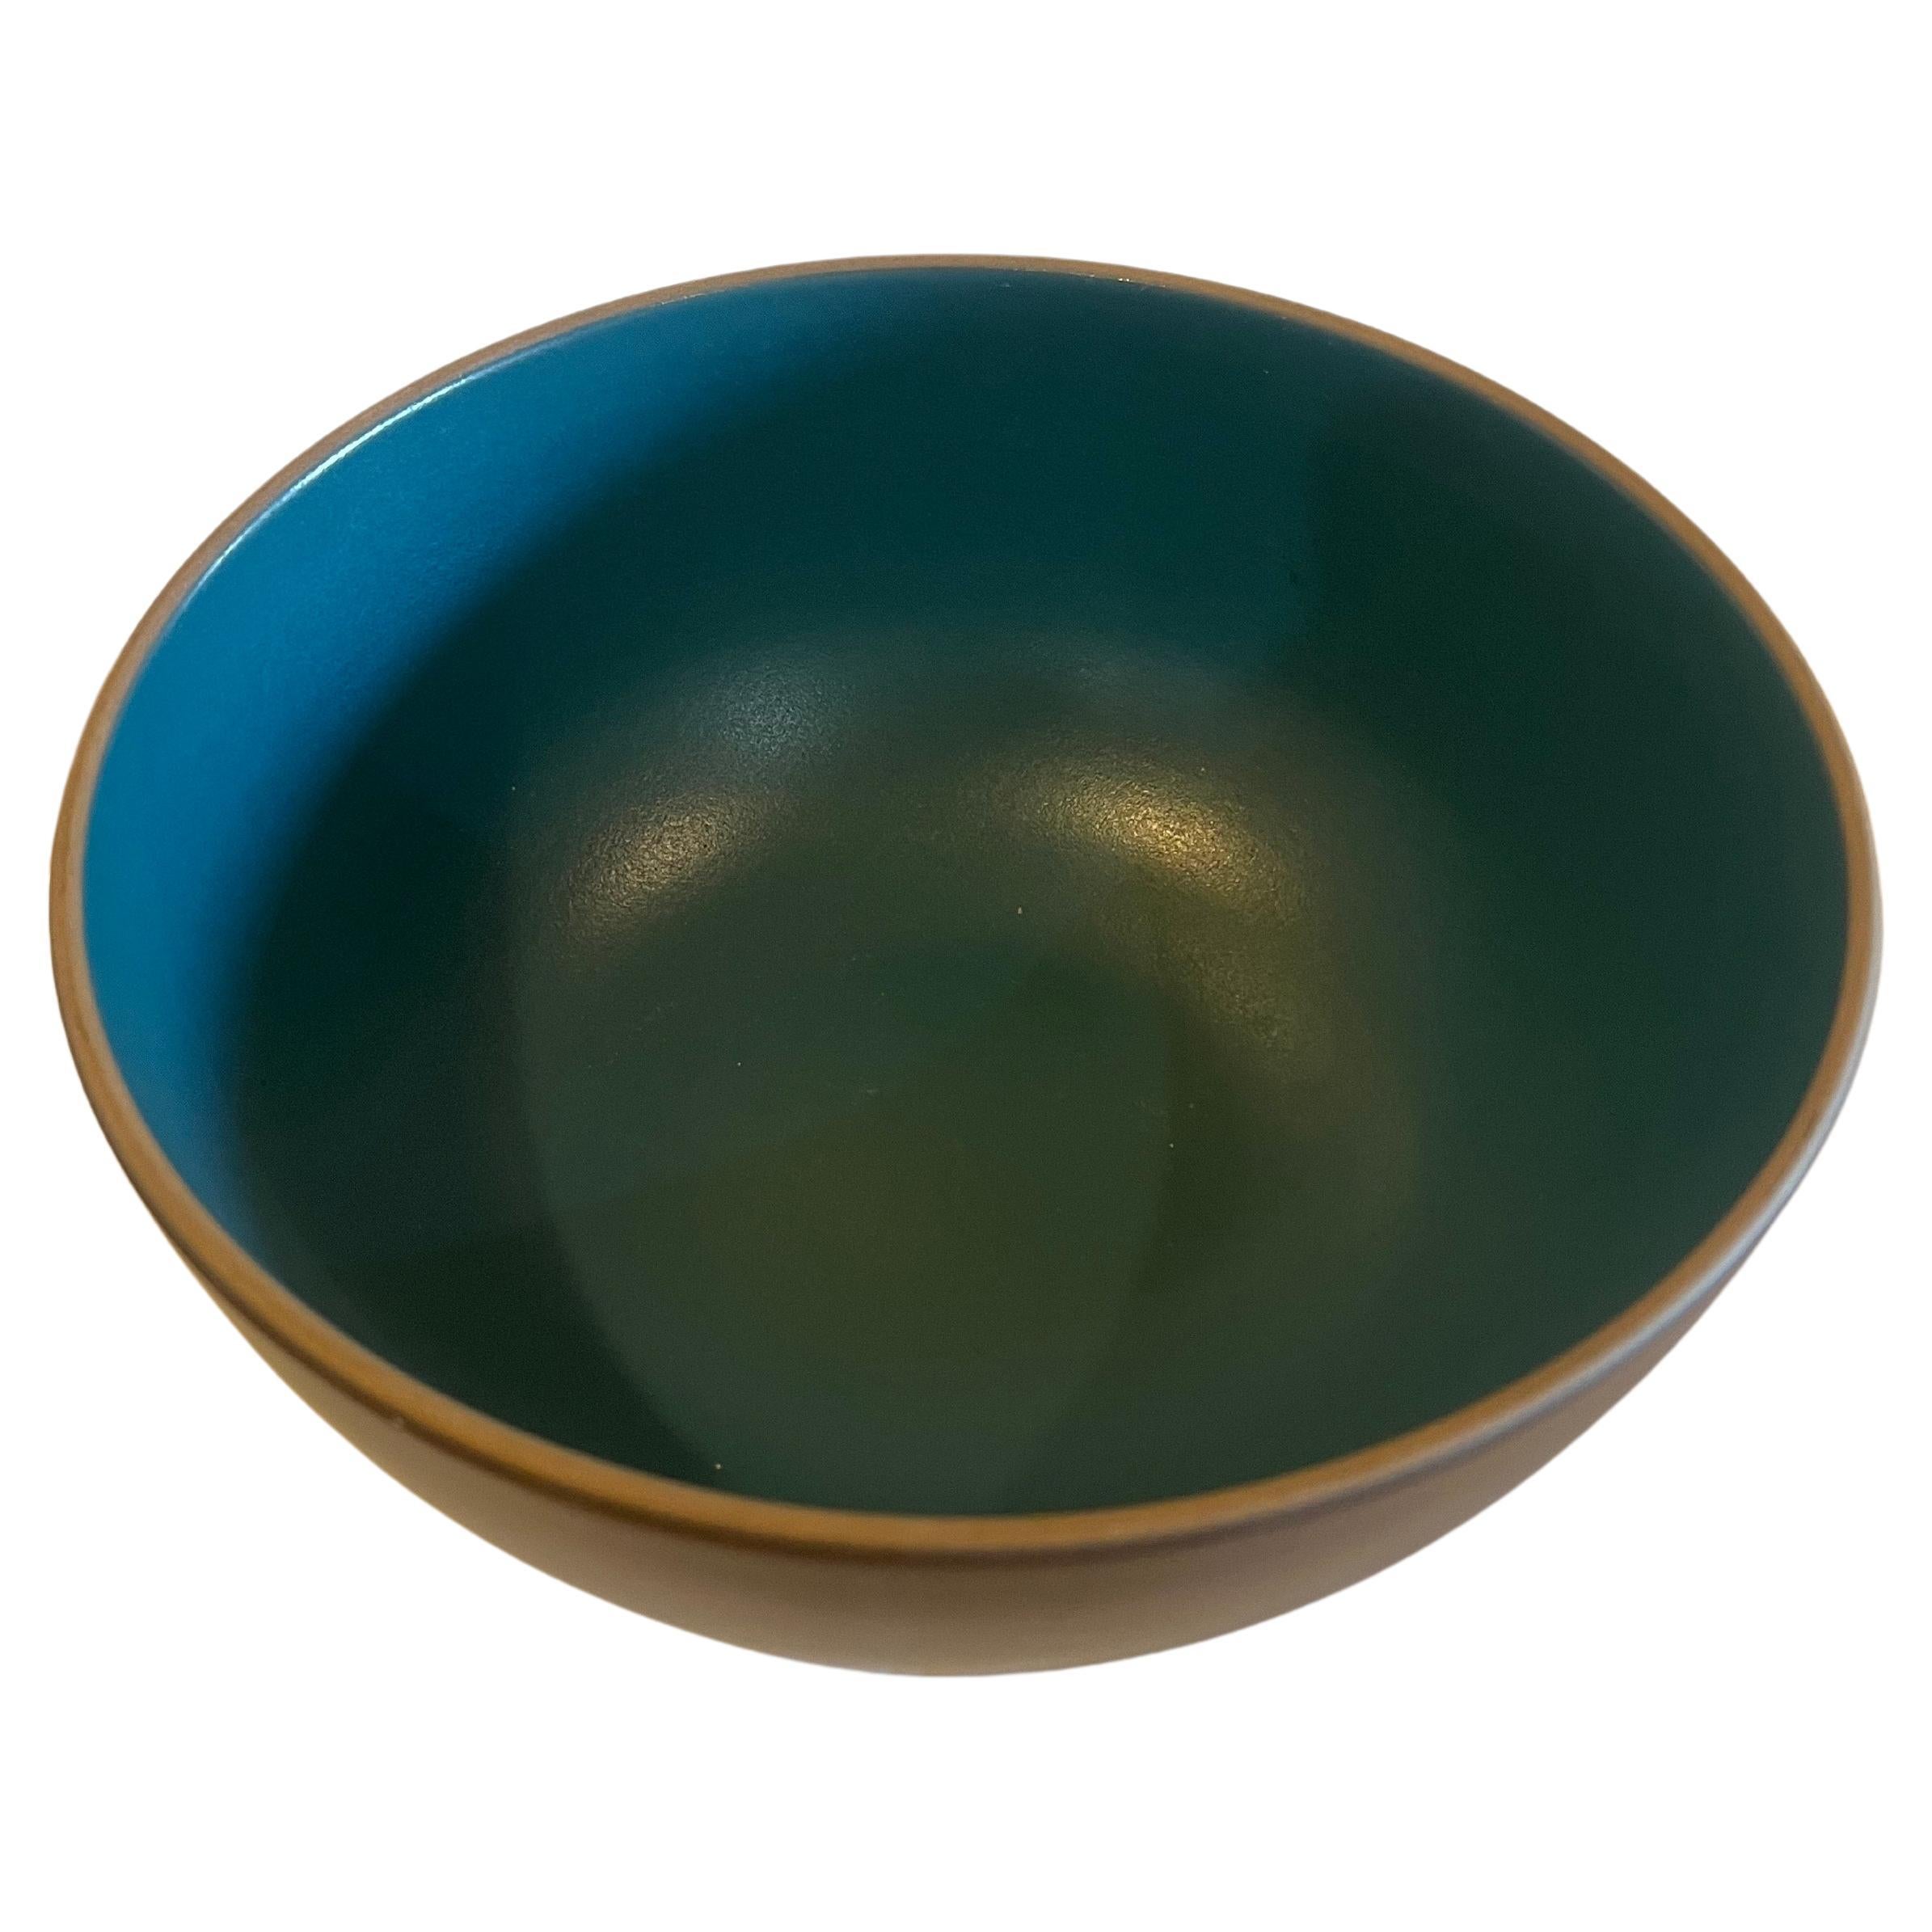 American Mid-Century Modern Rare 2 Tone Large Bowl by Heath Ceramics California Design